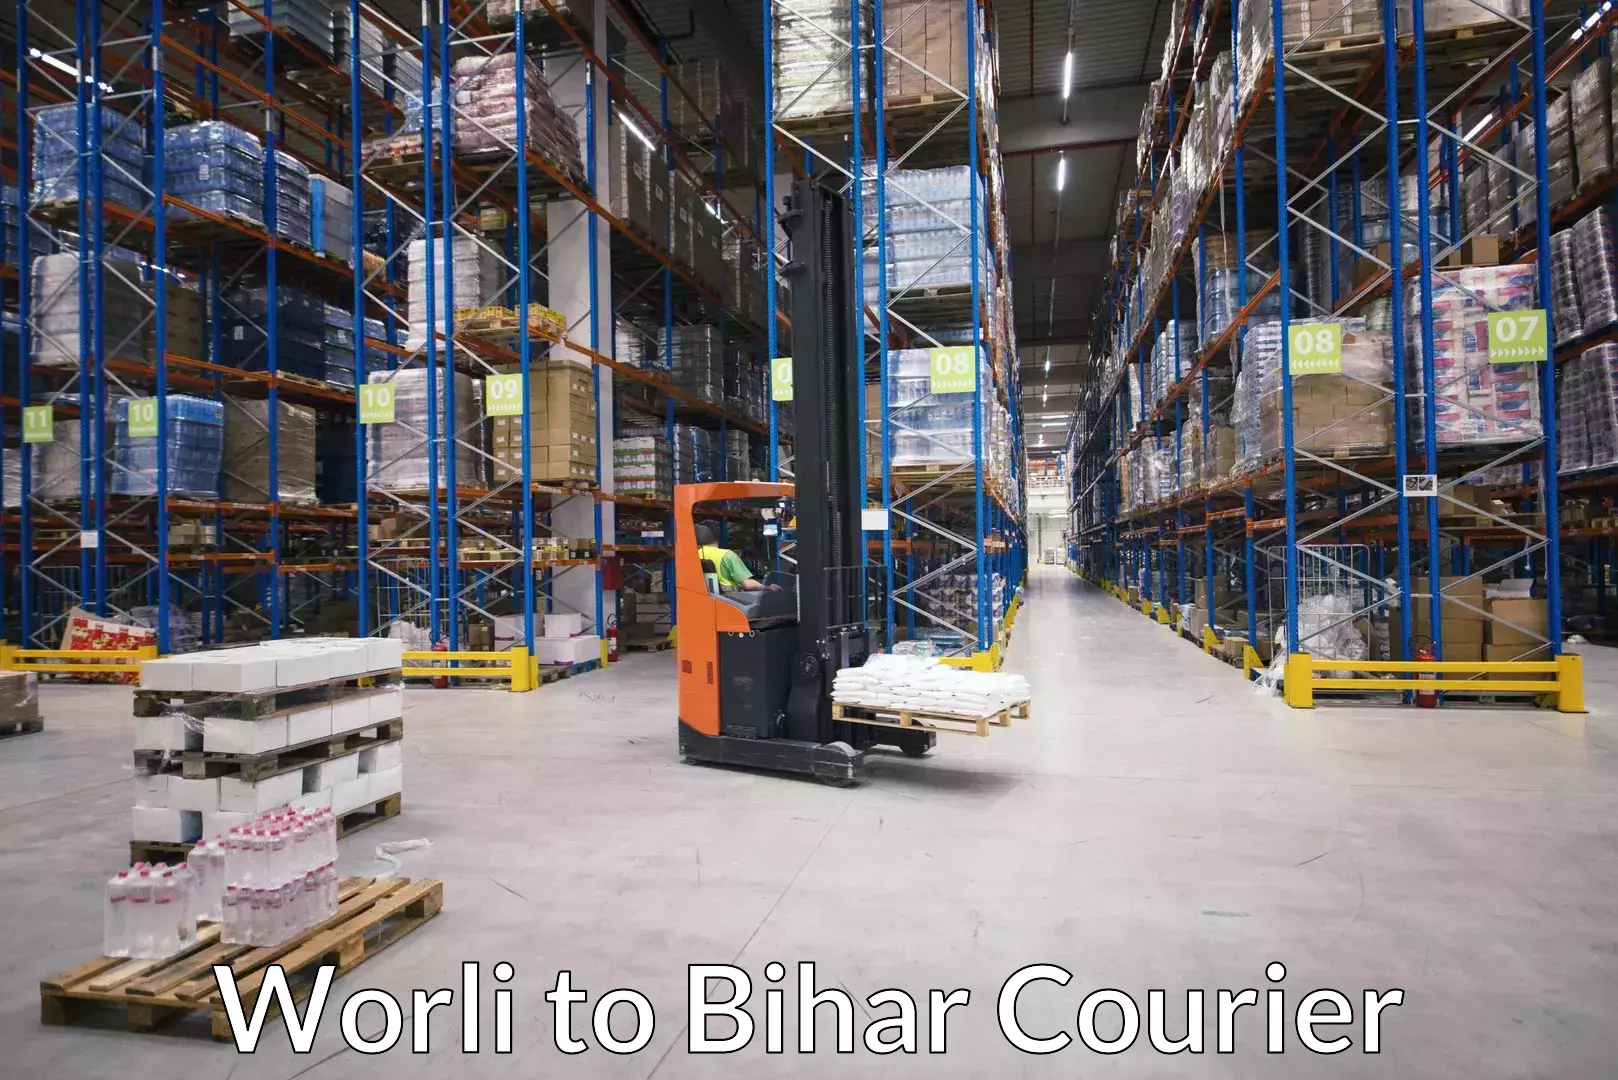 Luggage shipment strategy Worli to Bihar